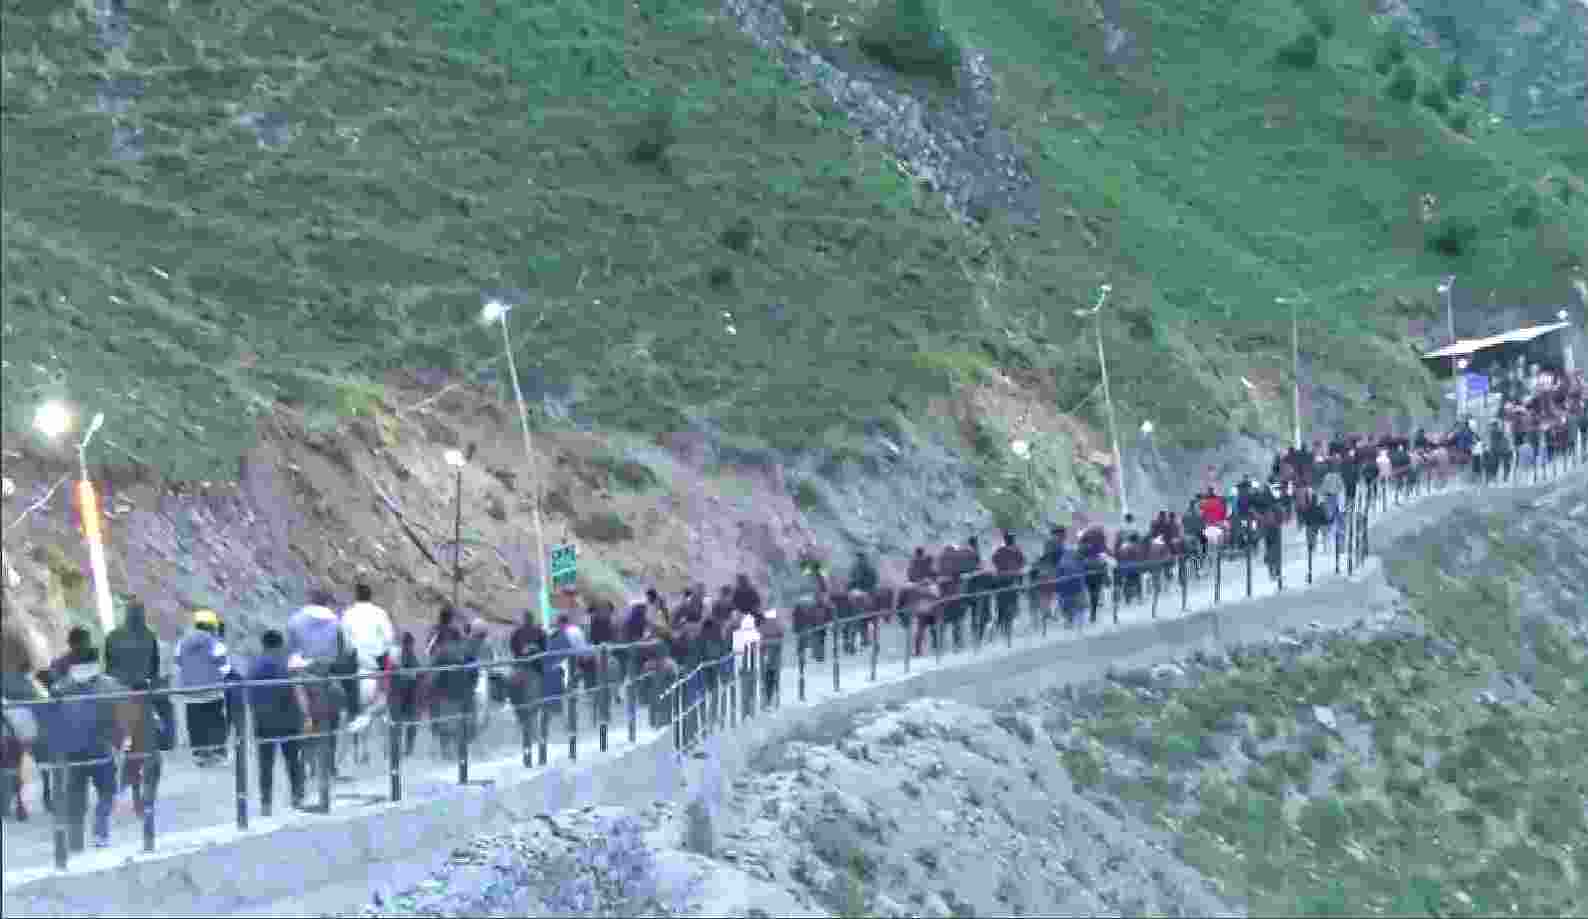 Amarnath Yatra: First batch of pilgrims heads to cave shrine